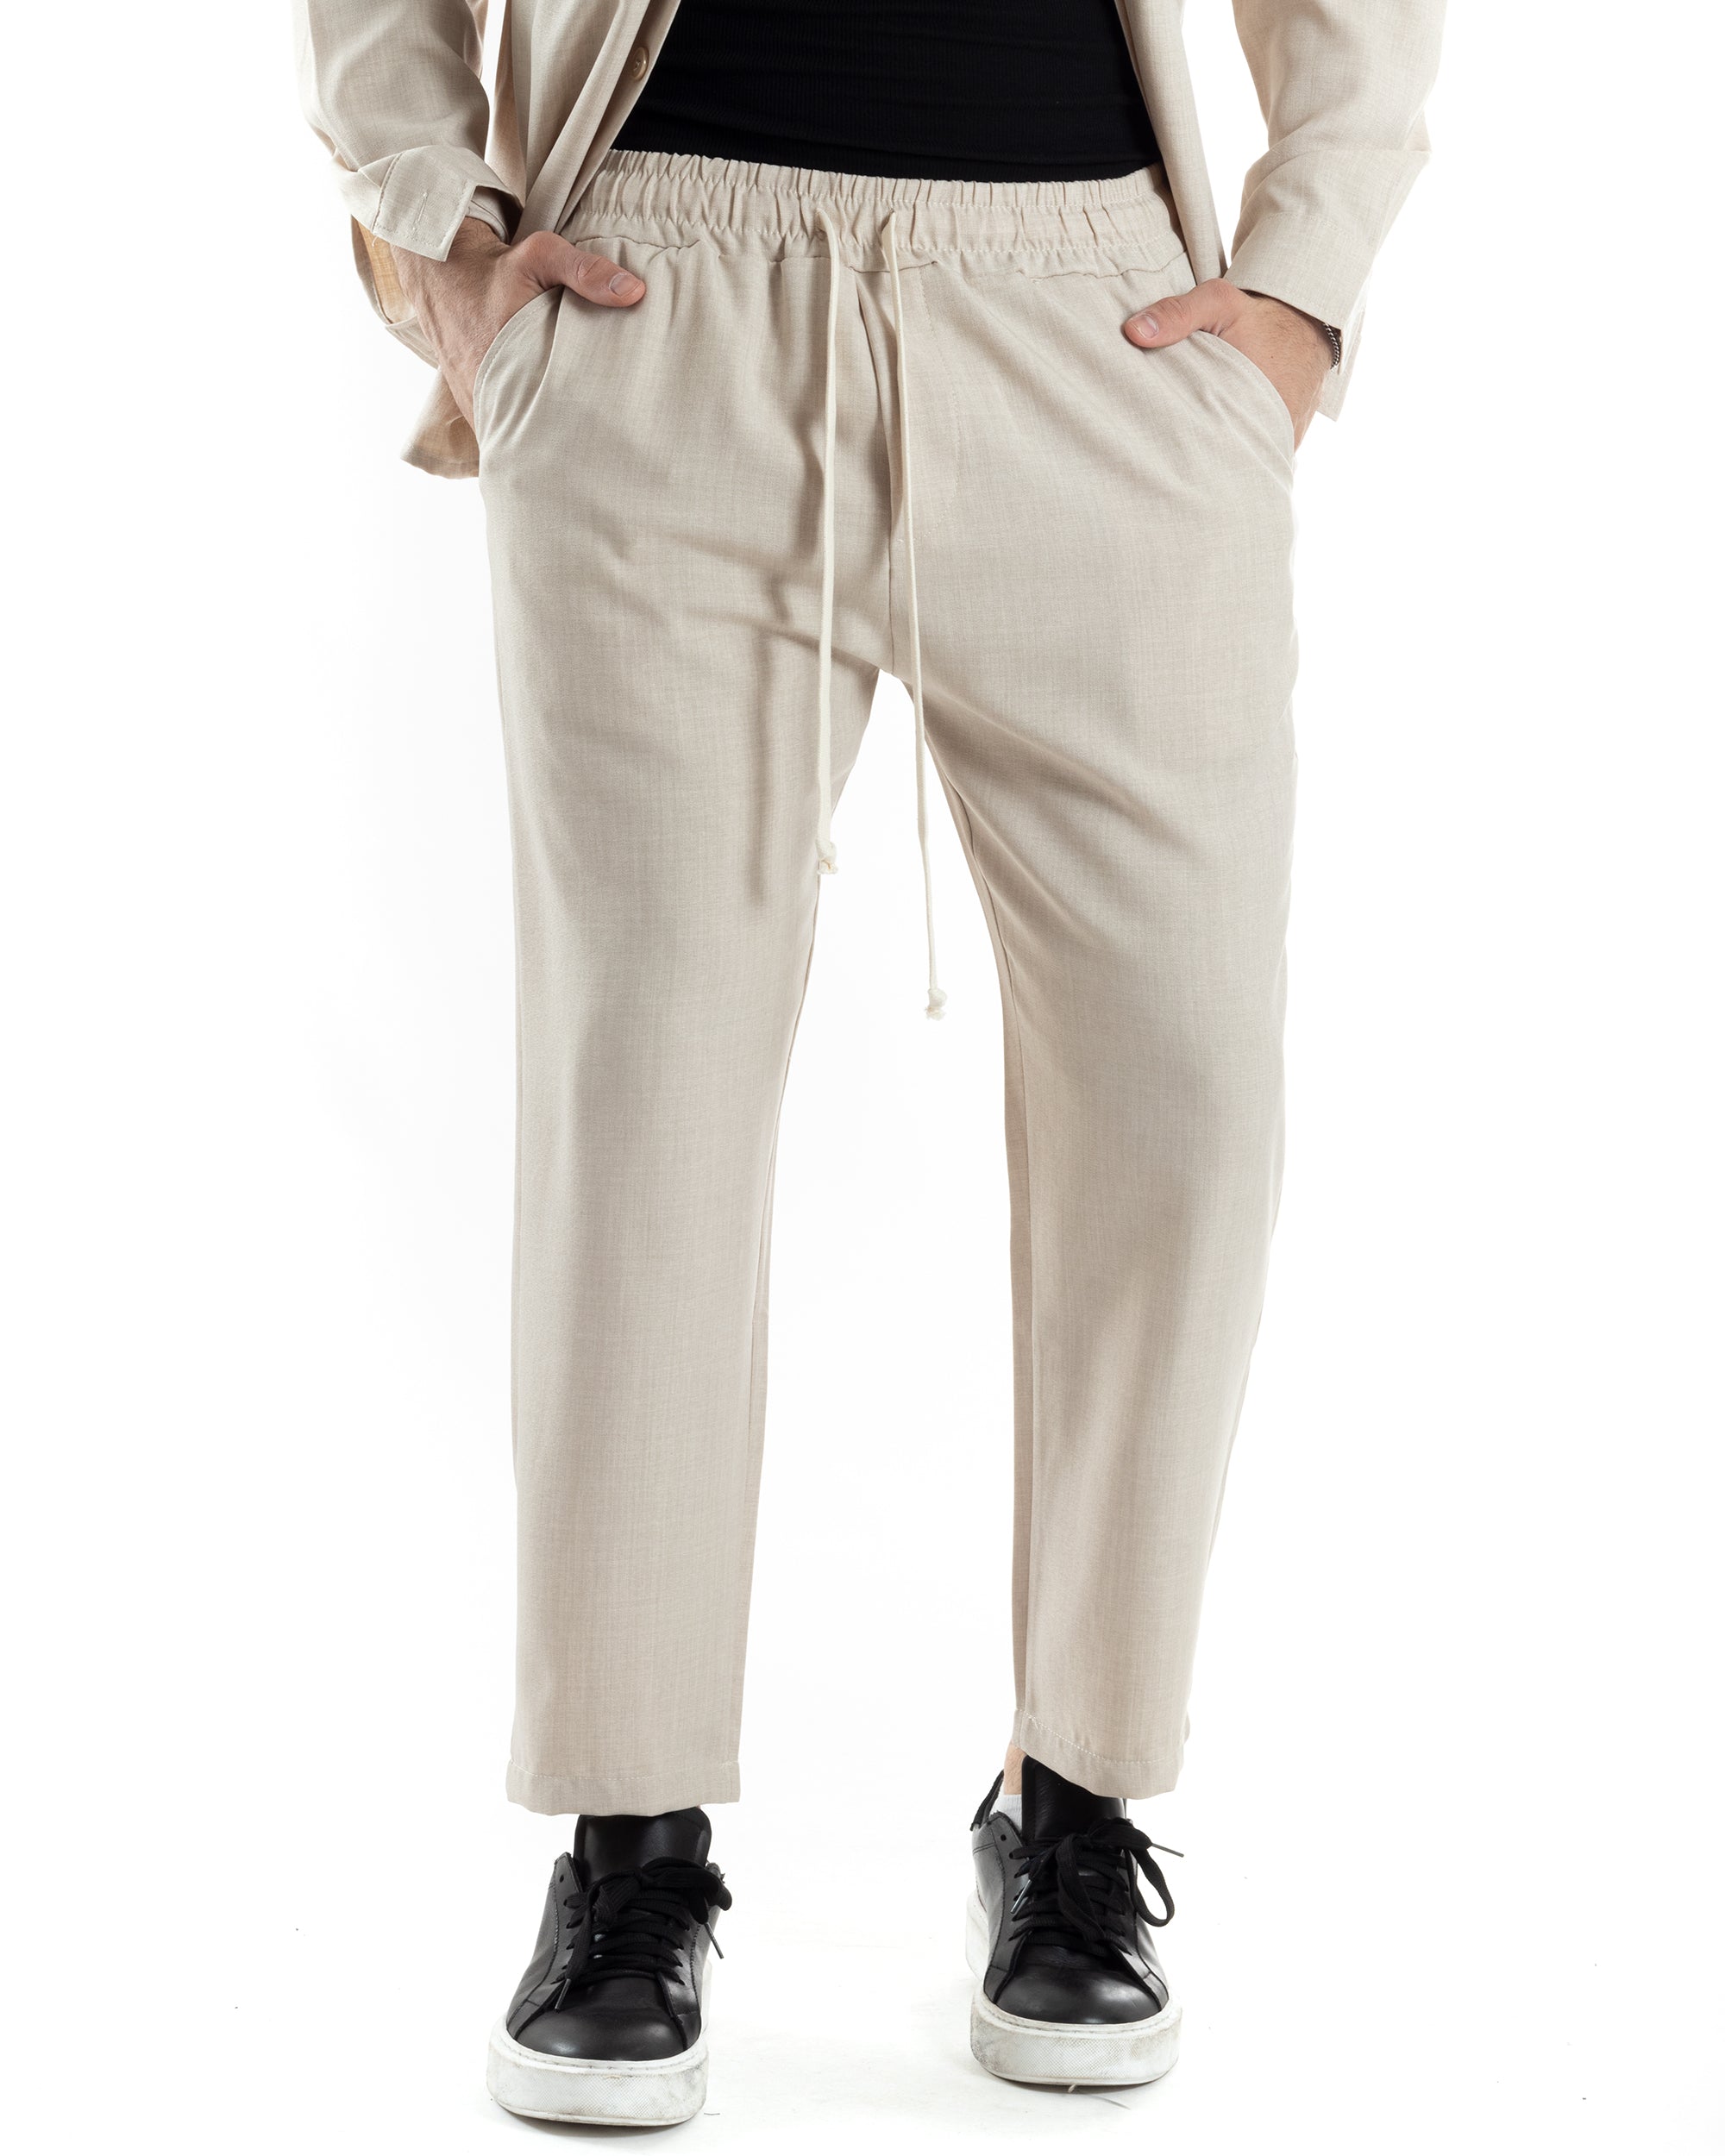 Completo Set Coordinato Uomo Viscosa Camicia Pantaloni Jogger Outfit Melangiato Beige GIOSAL-OU2453A